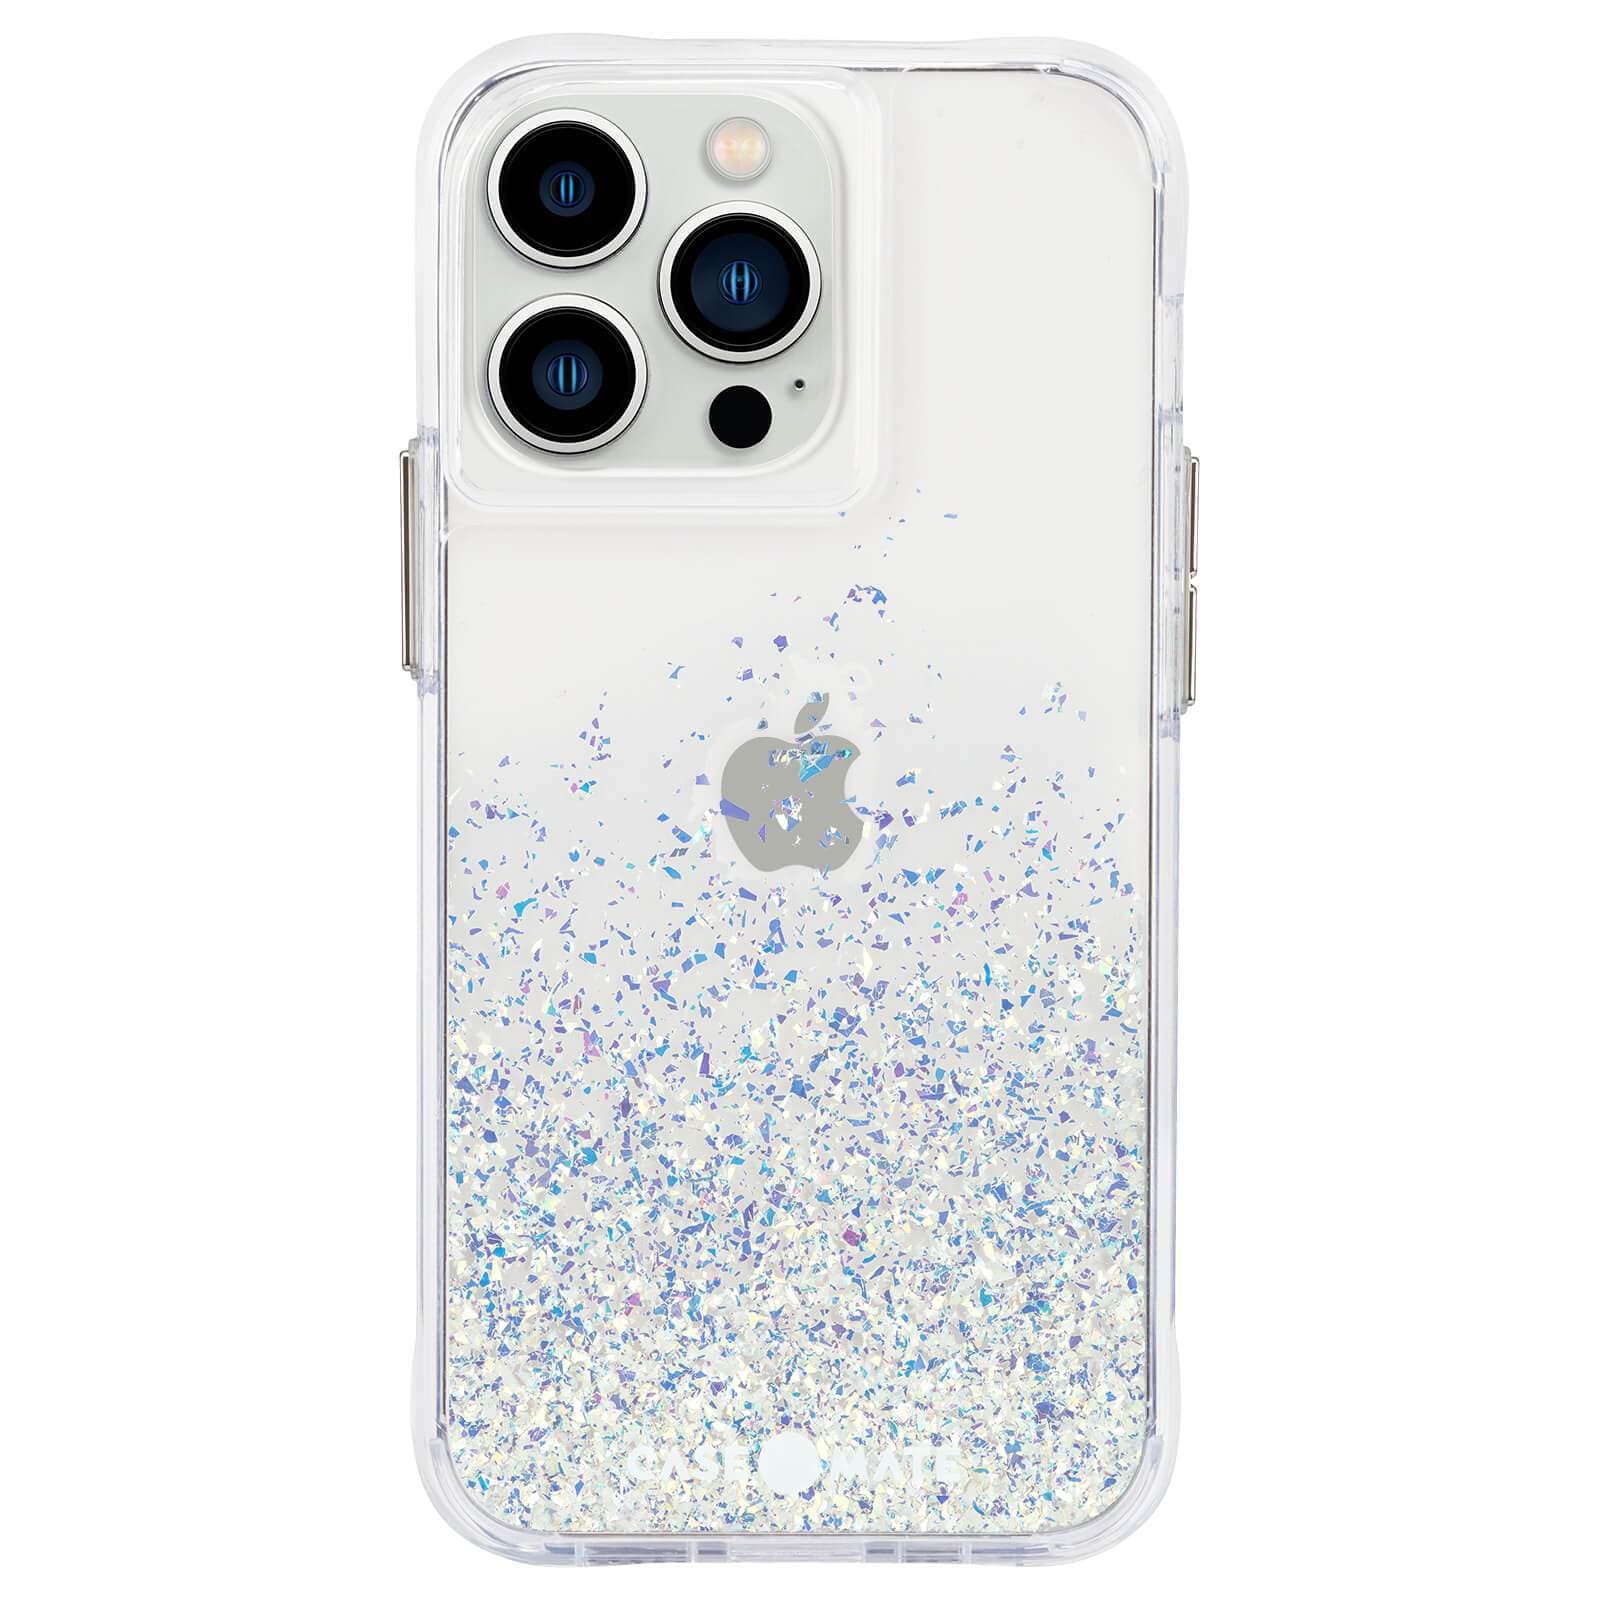 Ombre Stardust Glitter Samsung Case –